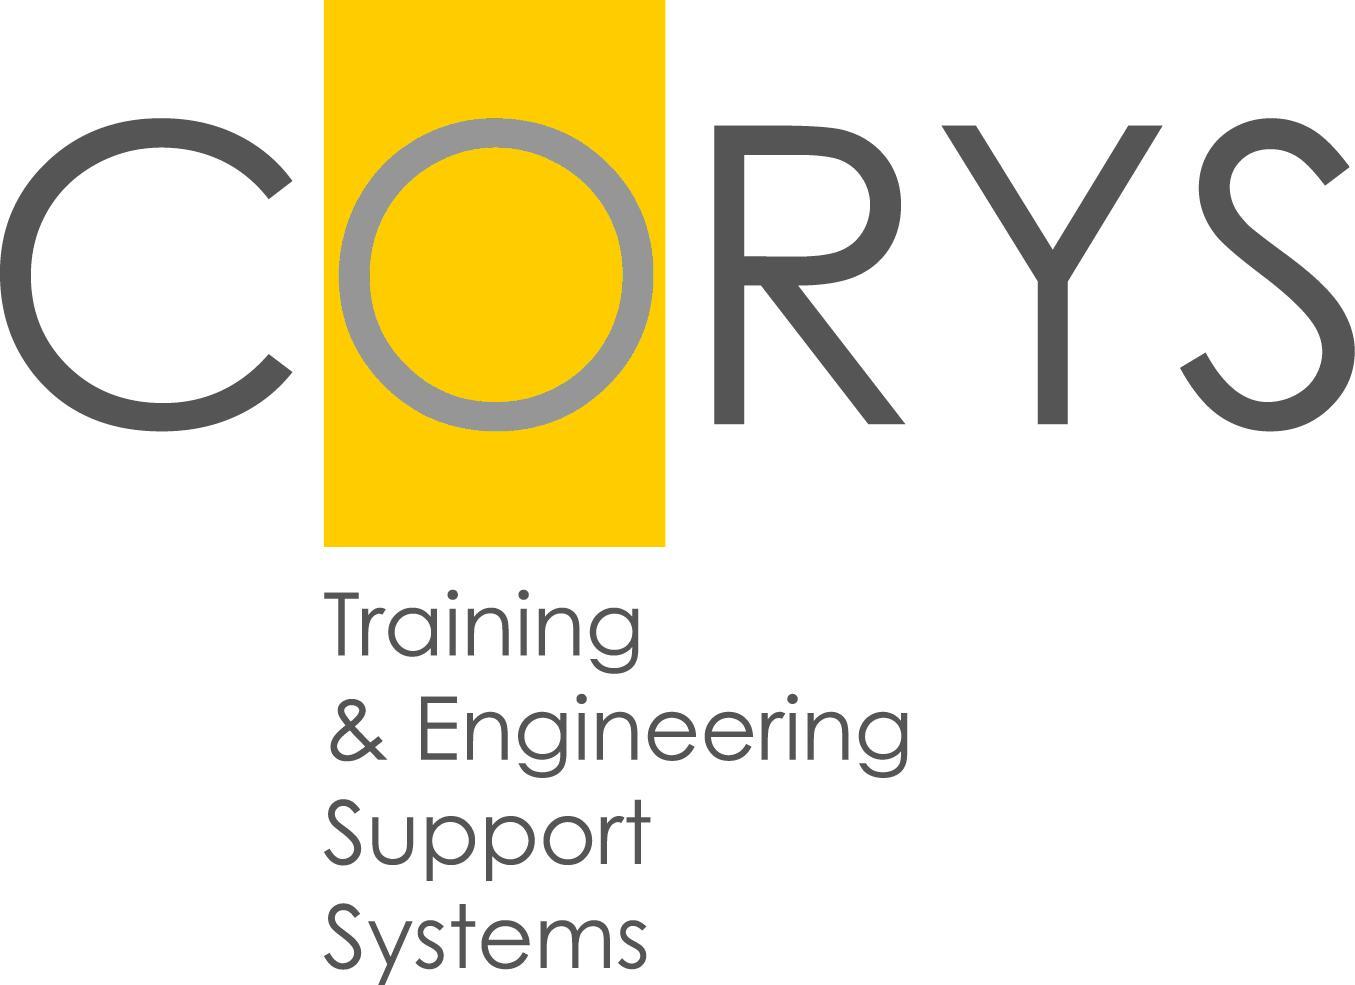 Corys Logo photo - 1